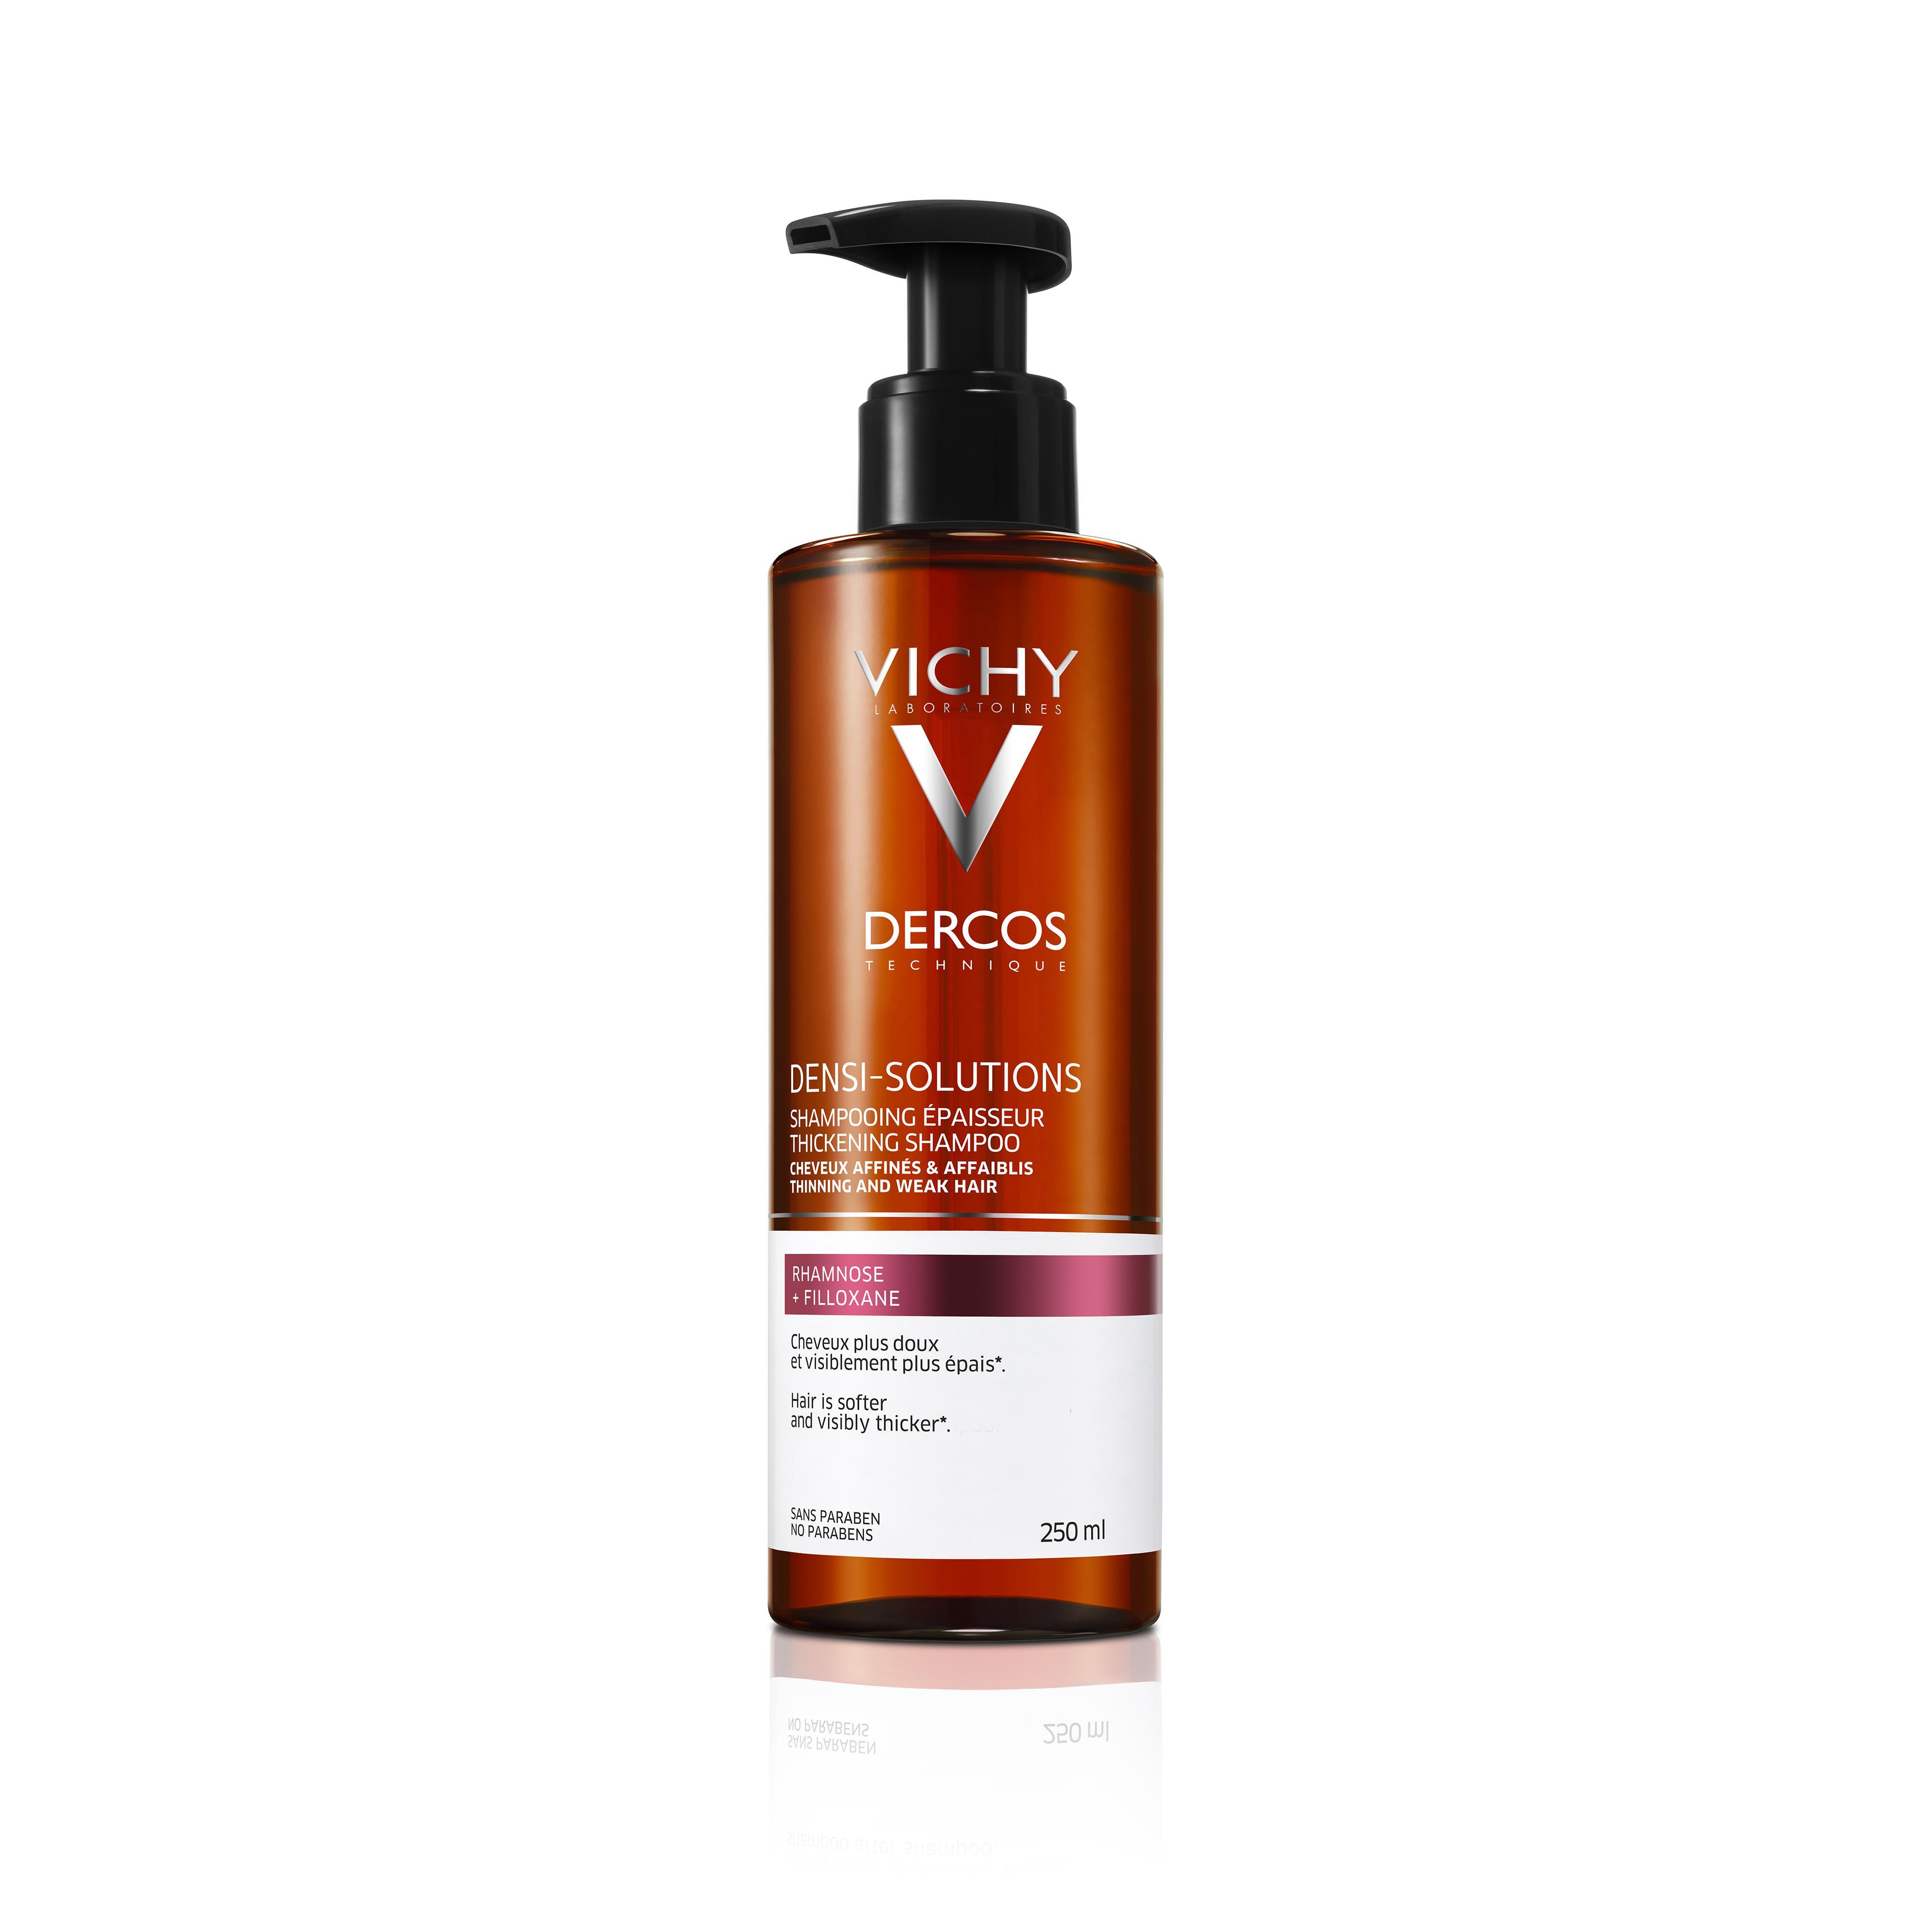 Vichy - Dercos Densi Solutions Shampoo 250ml